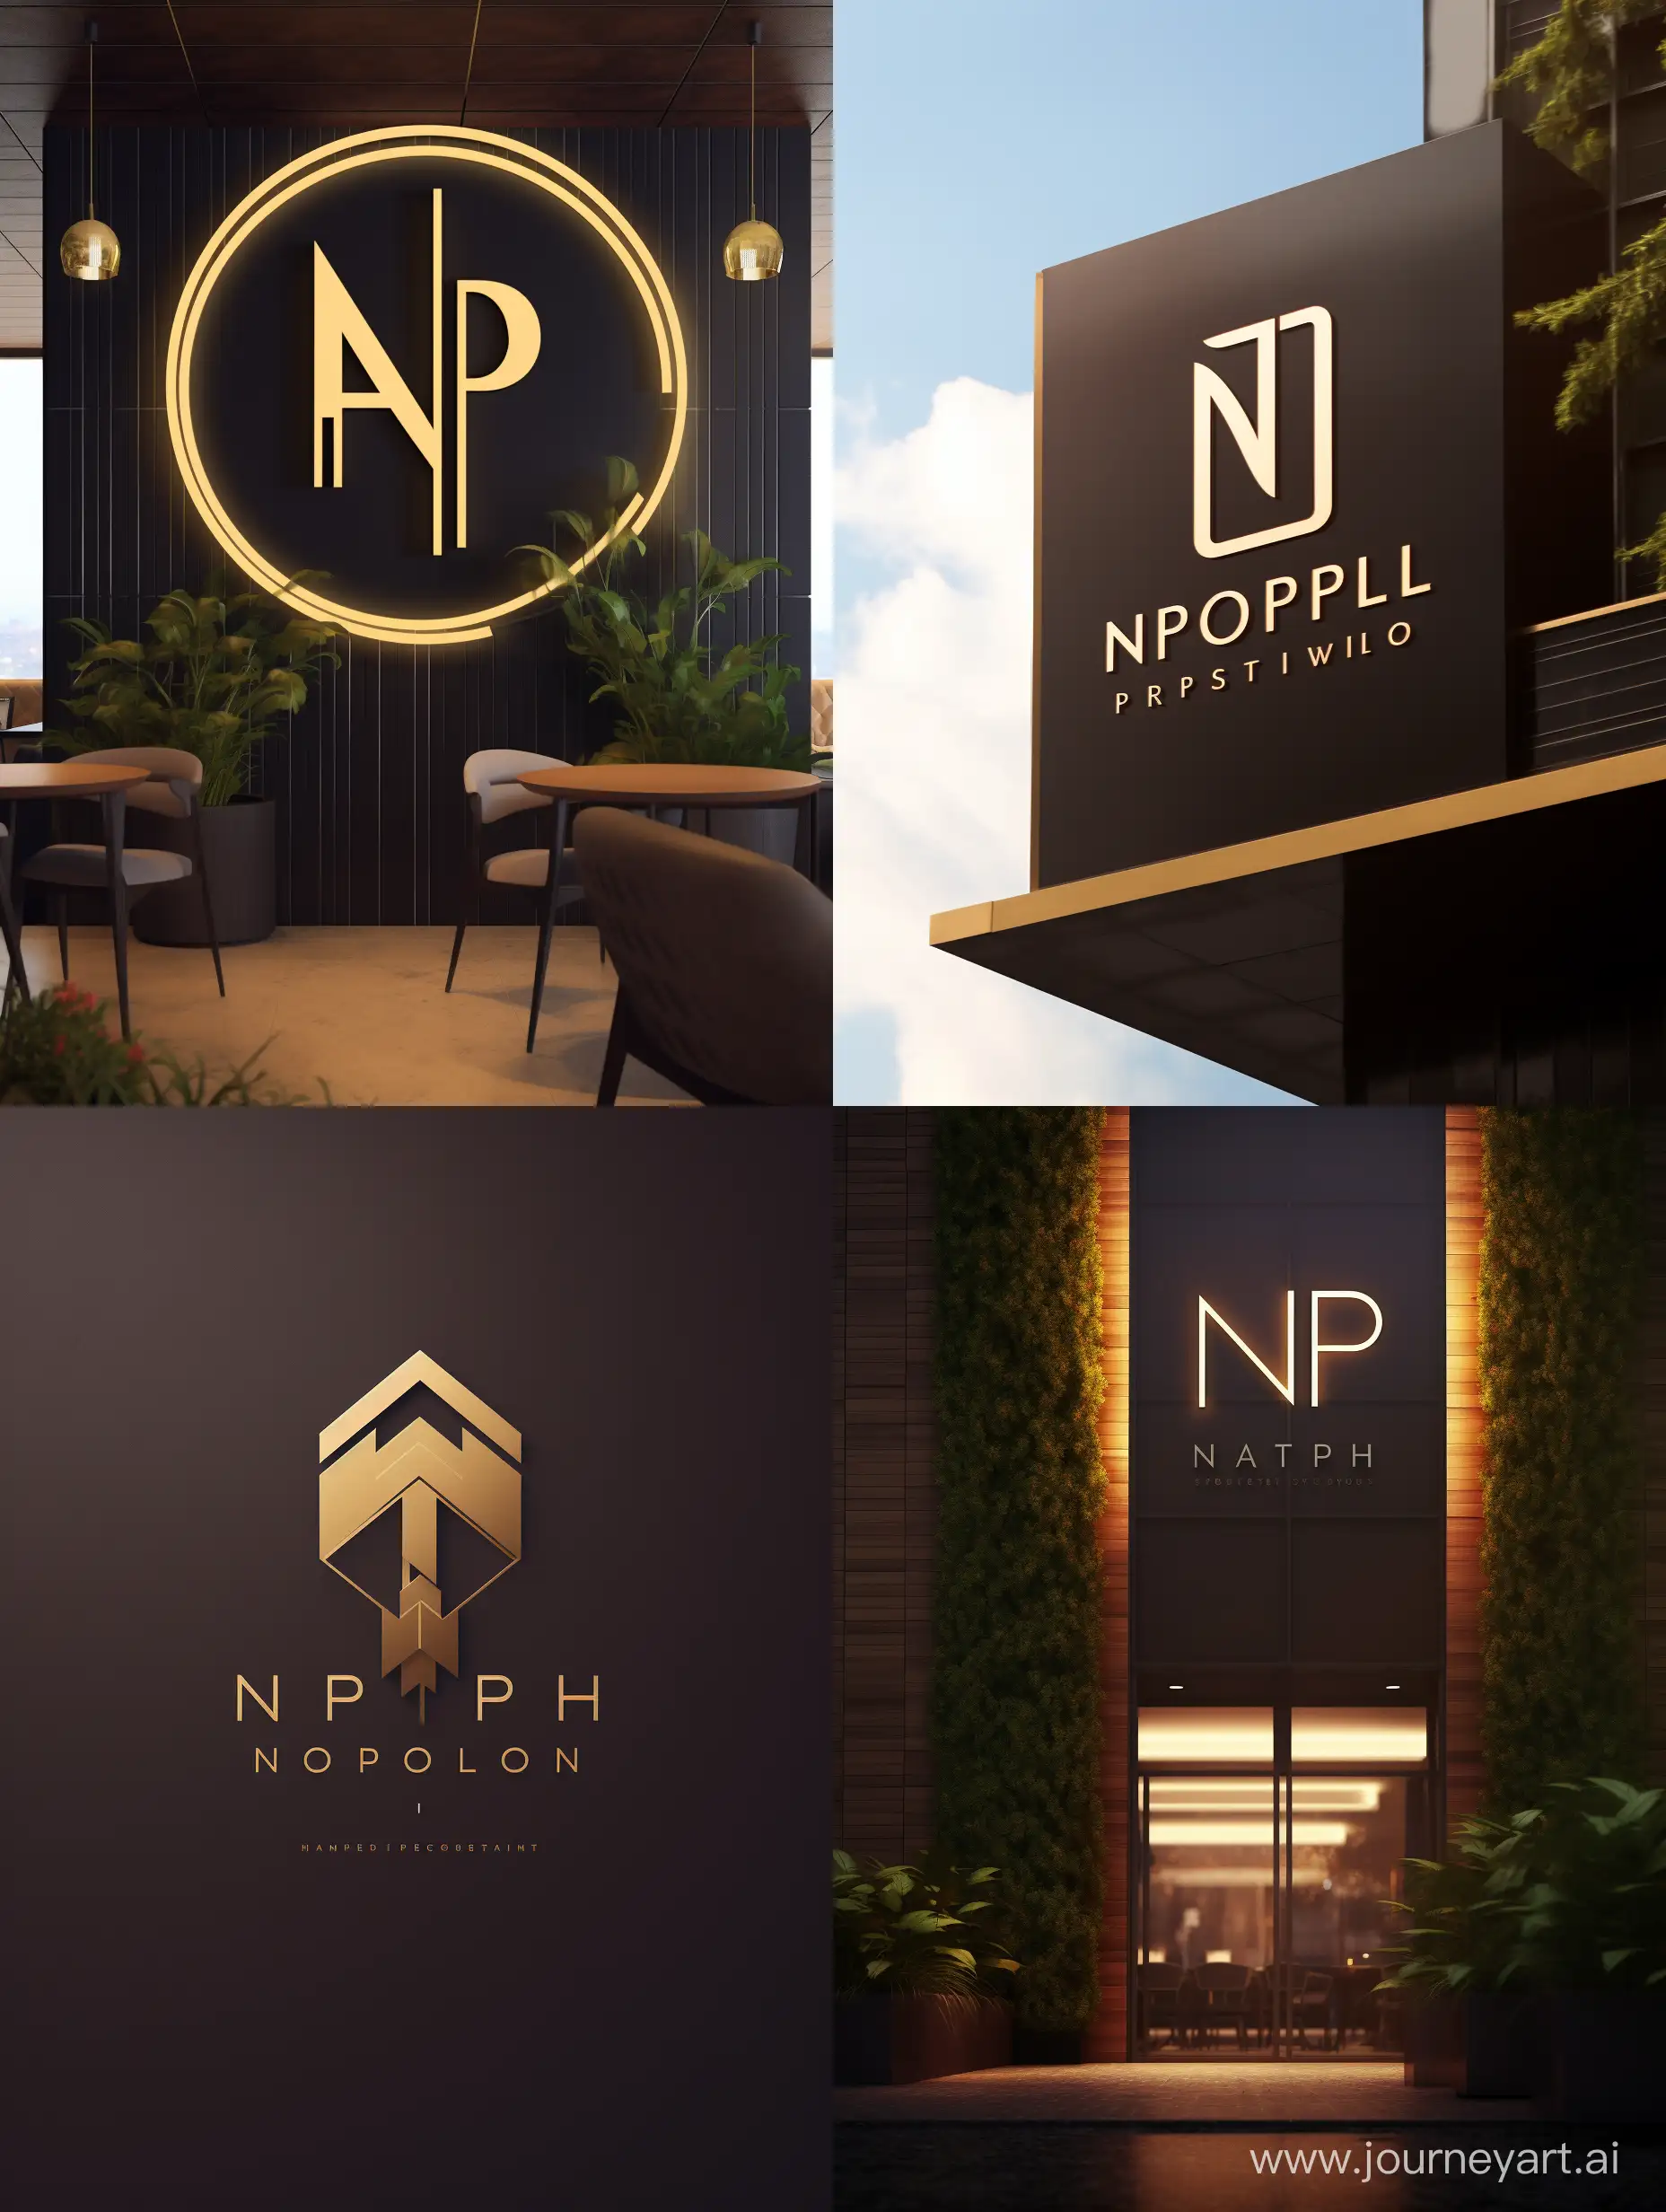 NP-Hotel-Branding-Design-in-34-Aspect-Ratio